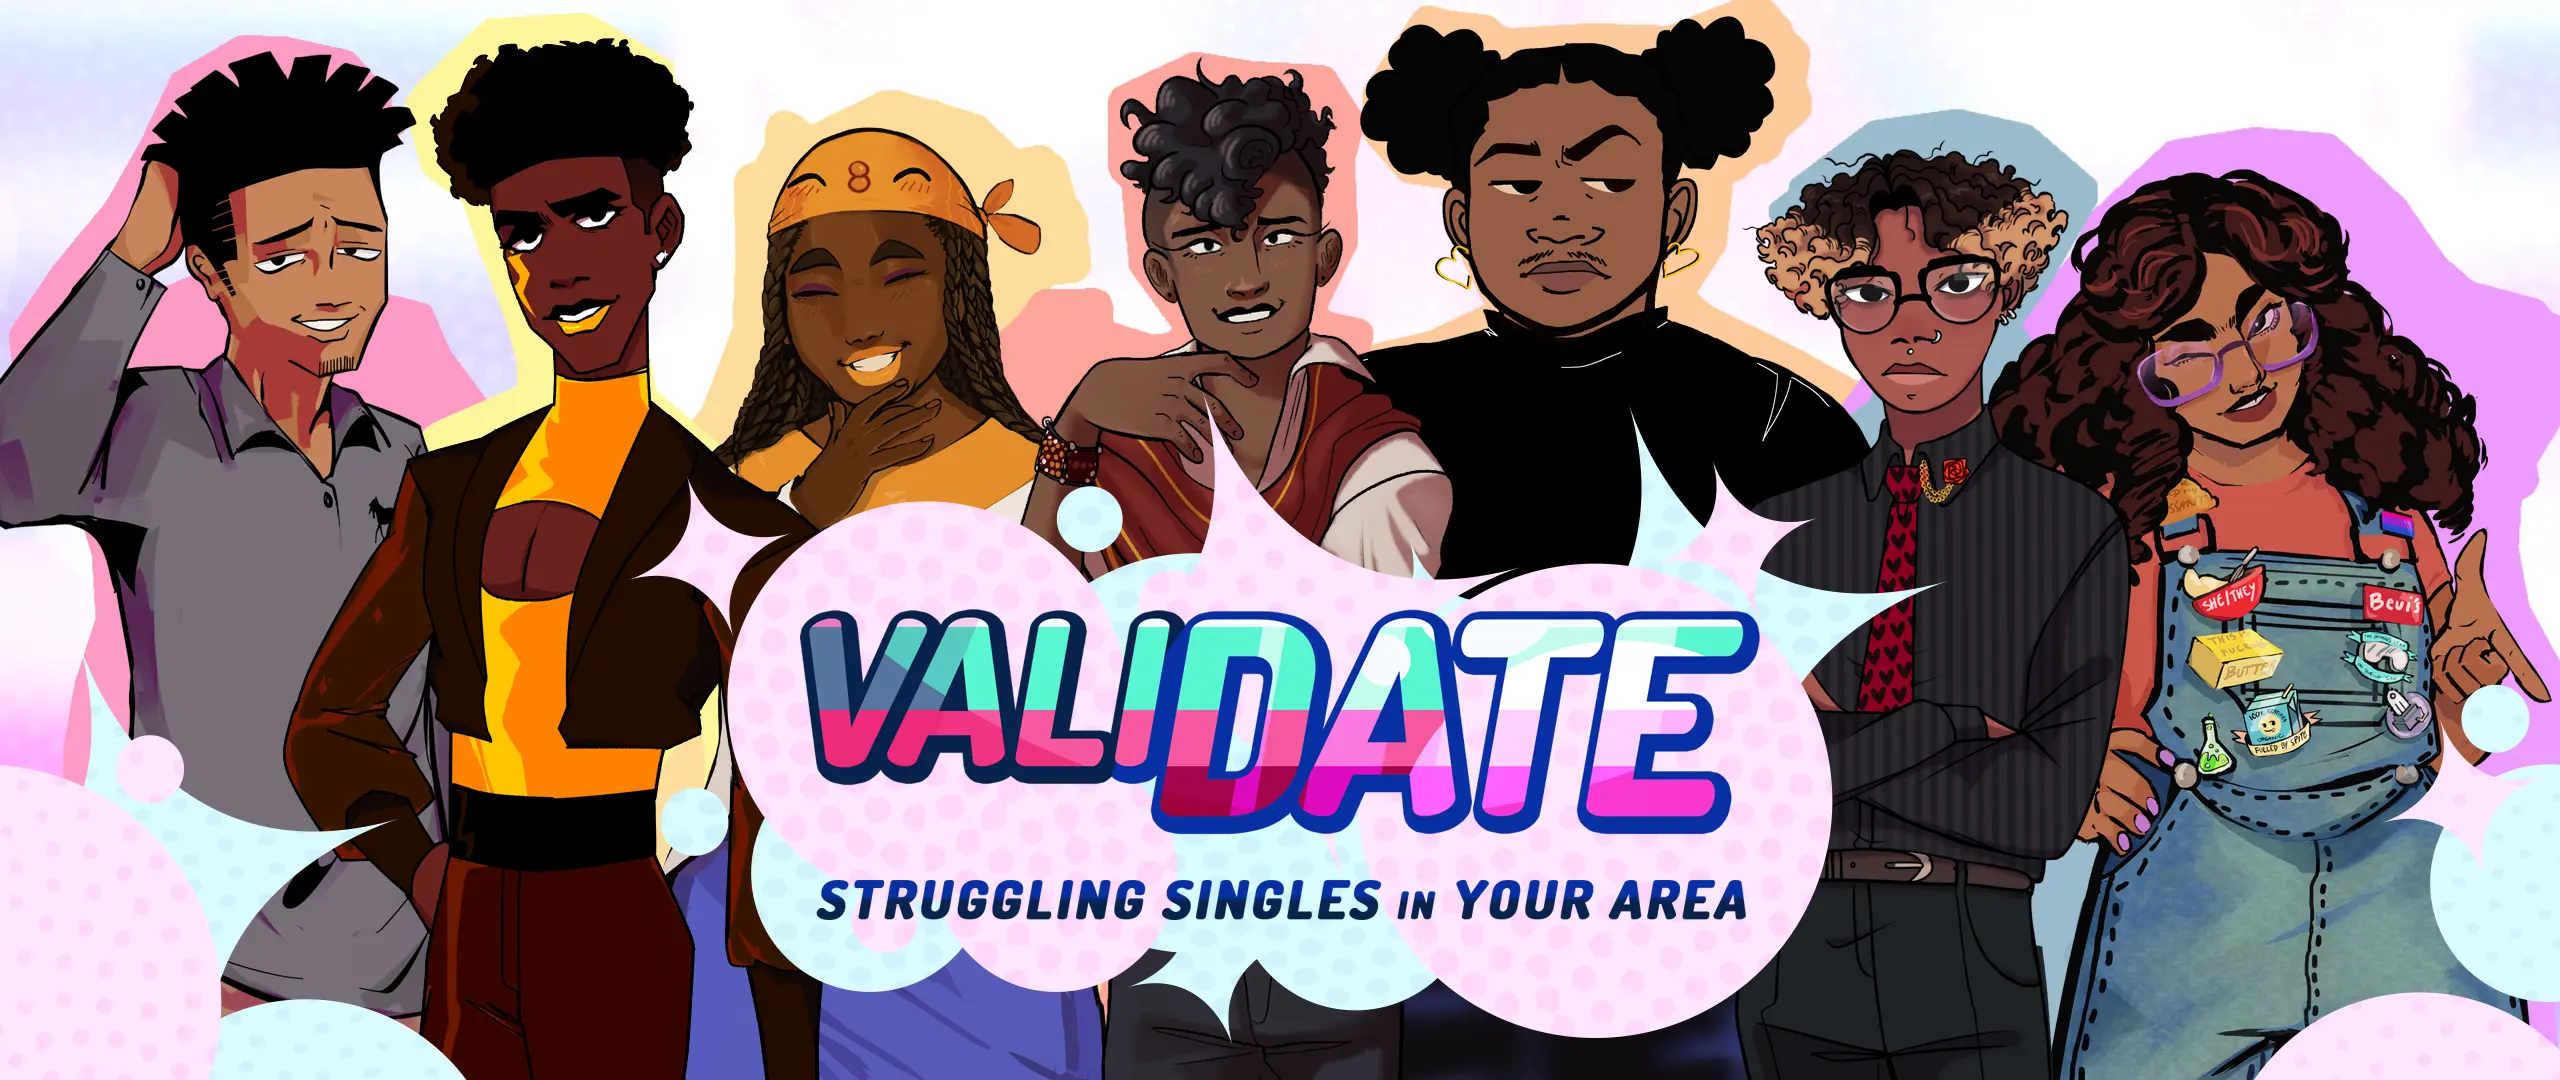 ValiDate: Struggling Singles in Your Area [v1.1] main image